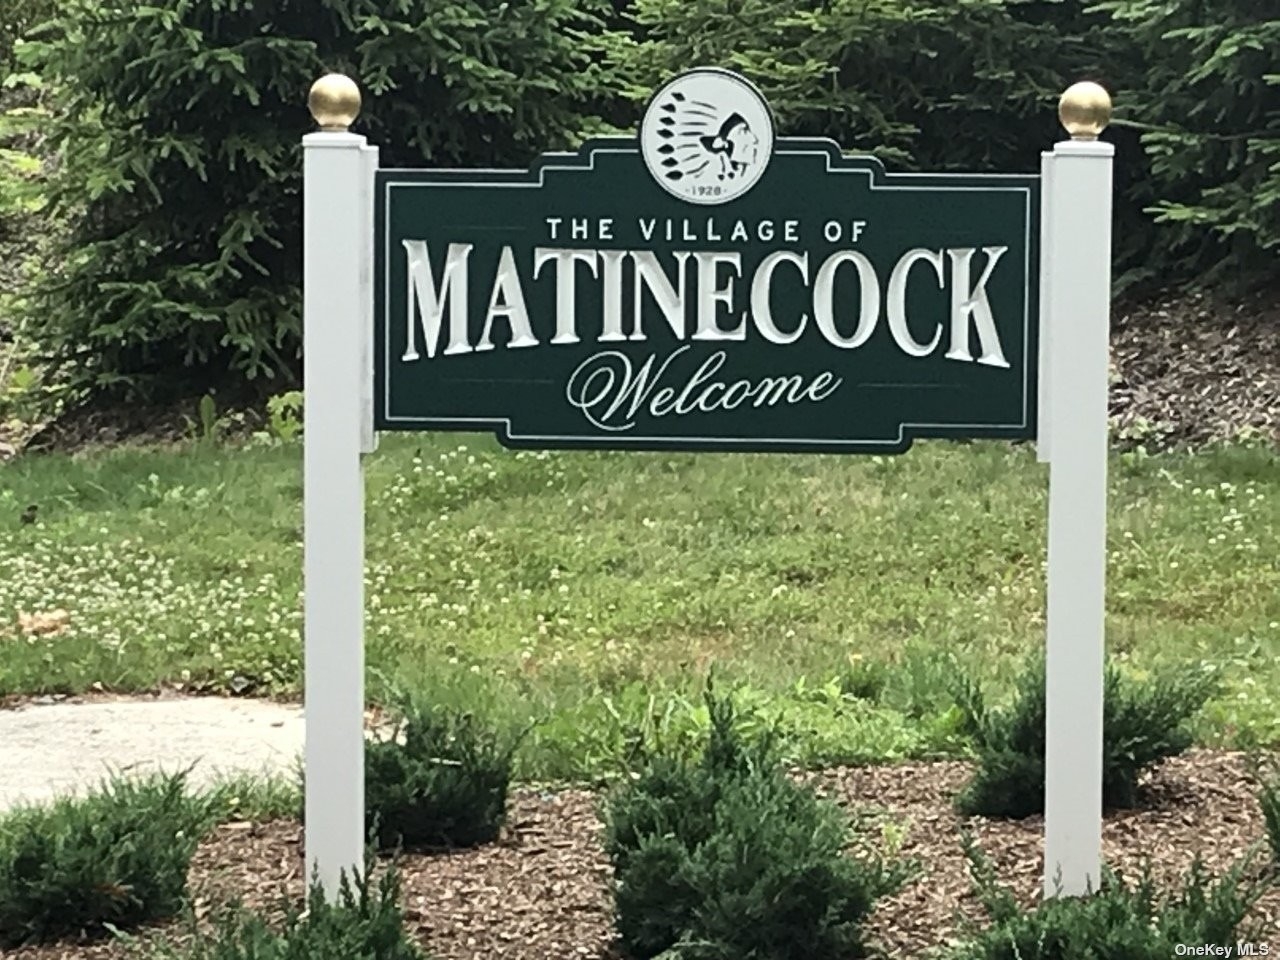 Property at Matinecock, NY 11560